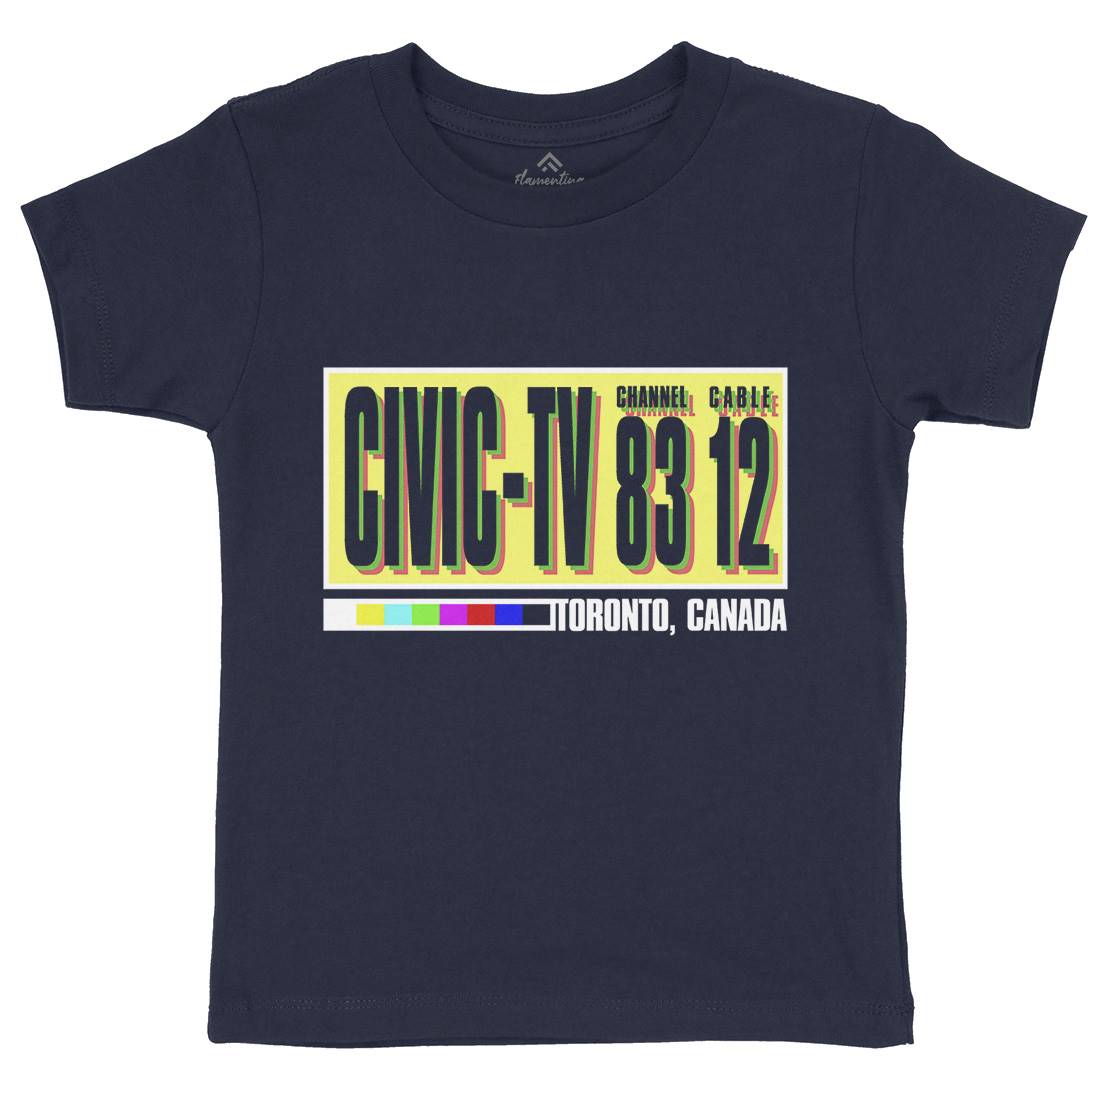 Civic-Tv Kids Crew Neck T-Shirt Media D406